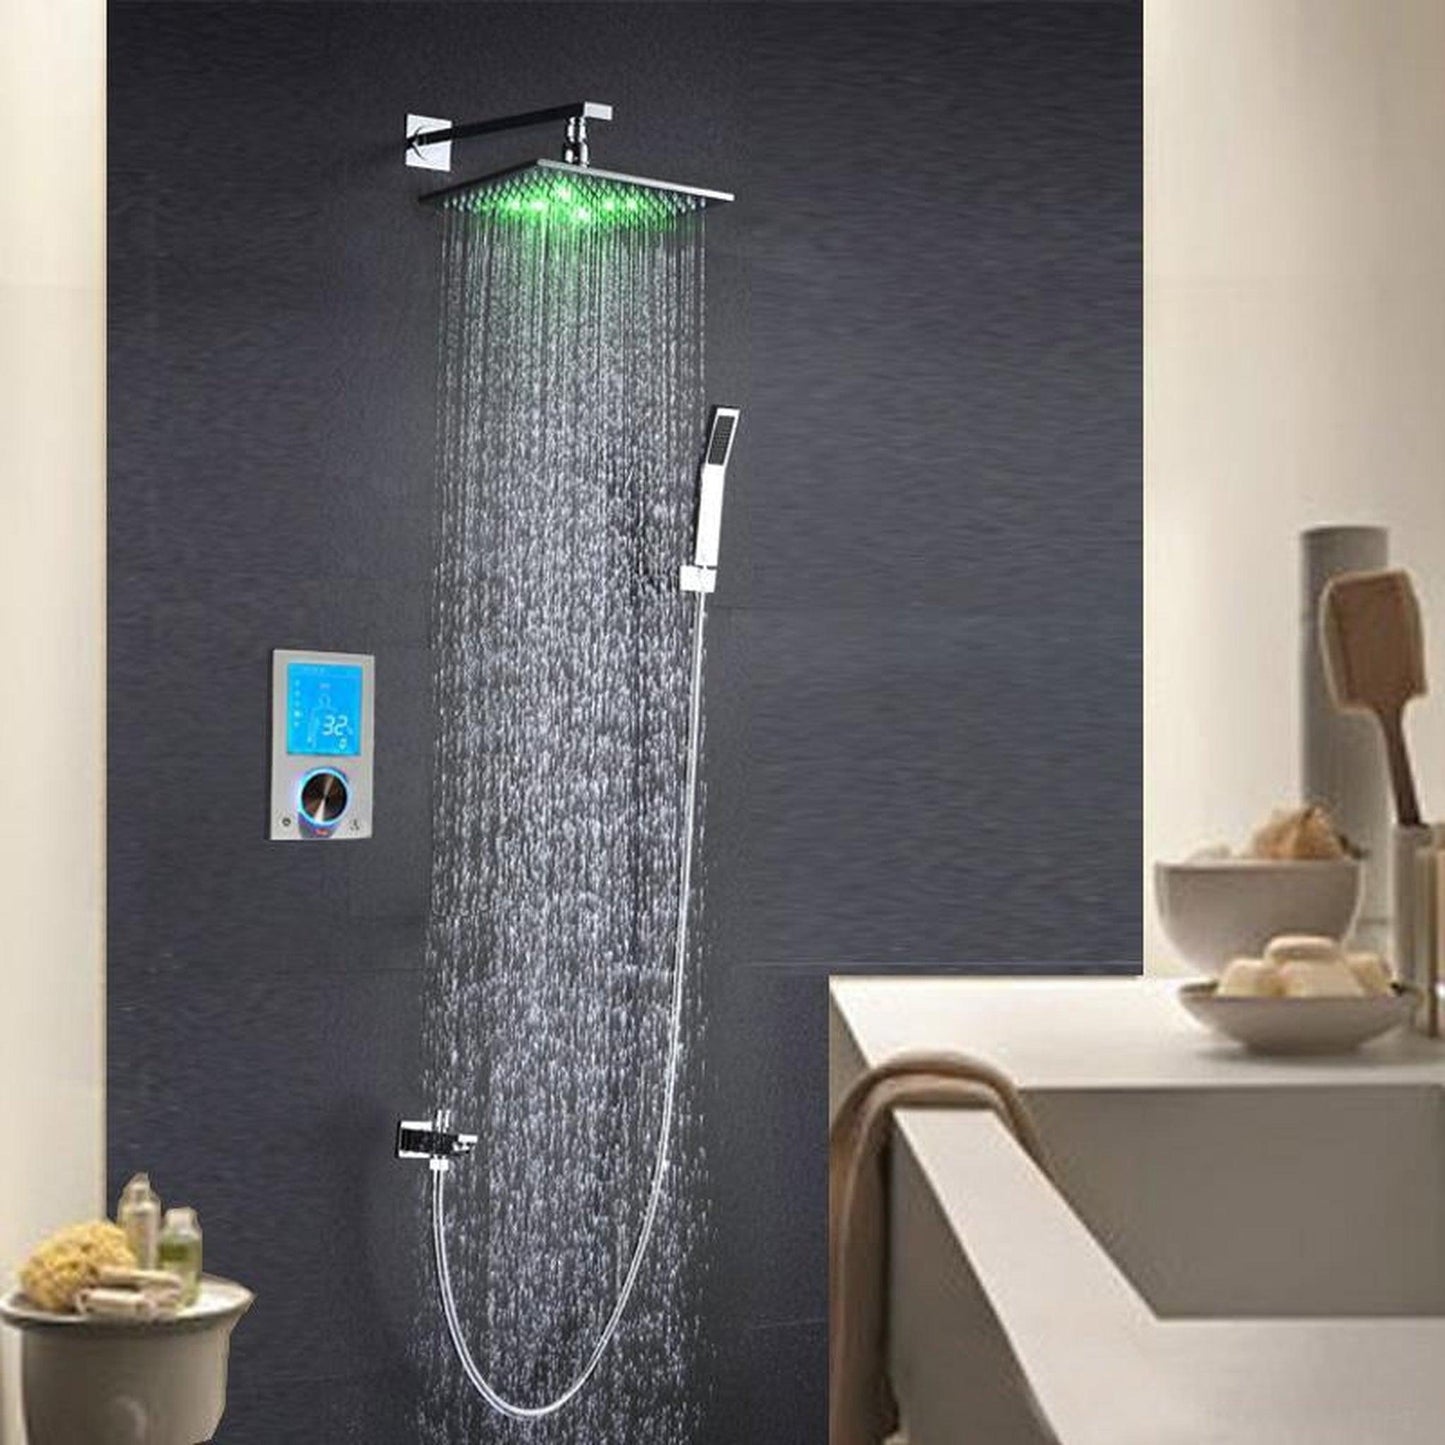 Fontana Flavia 8" Wall-Mounted Digital Color Changing LED Shower Set With Hand Shower